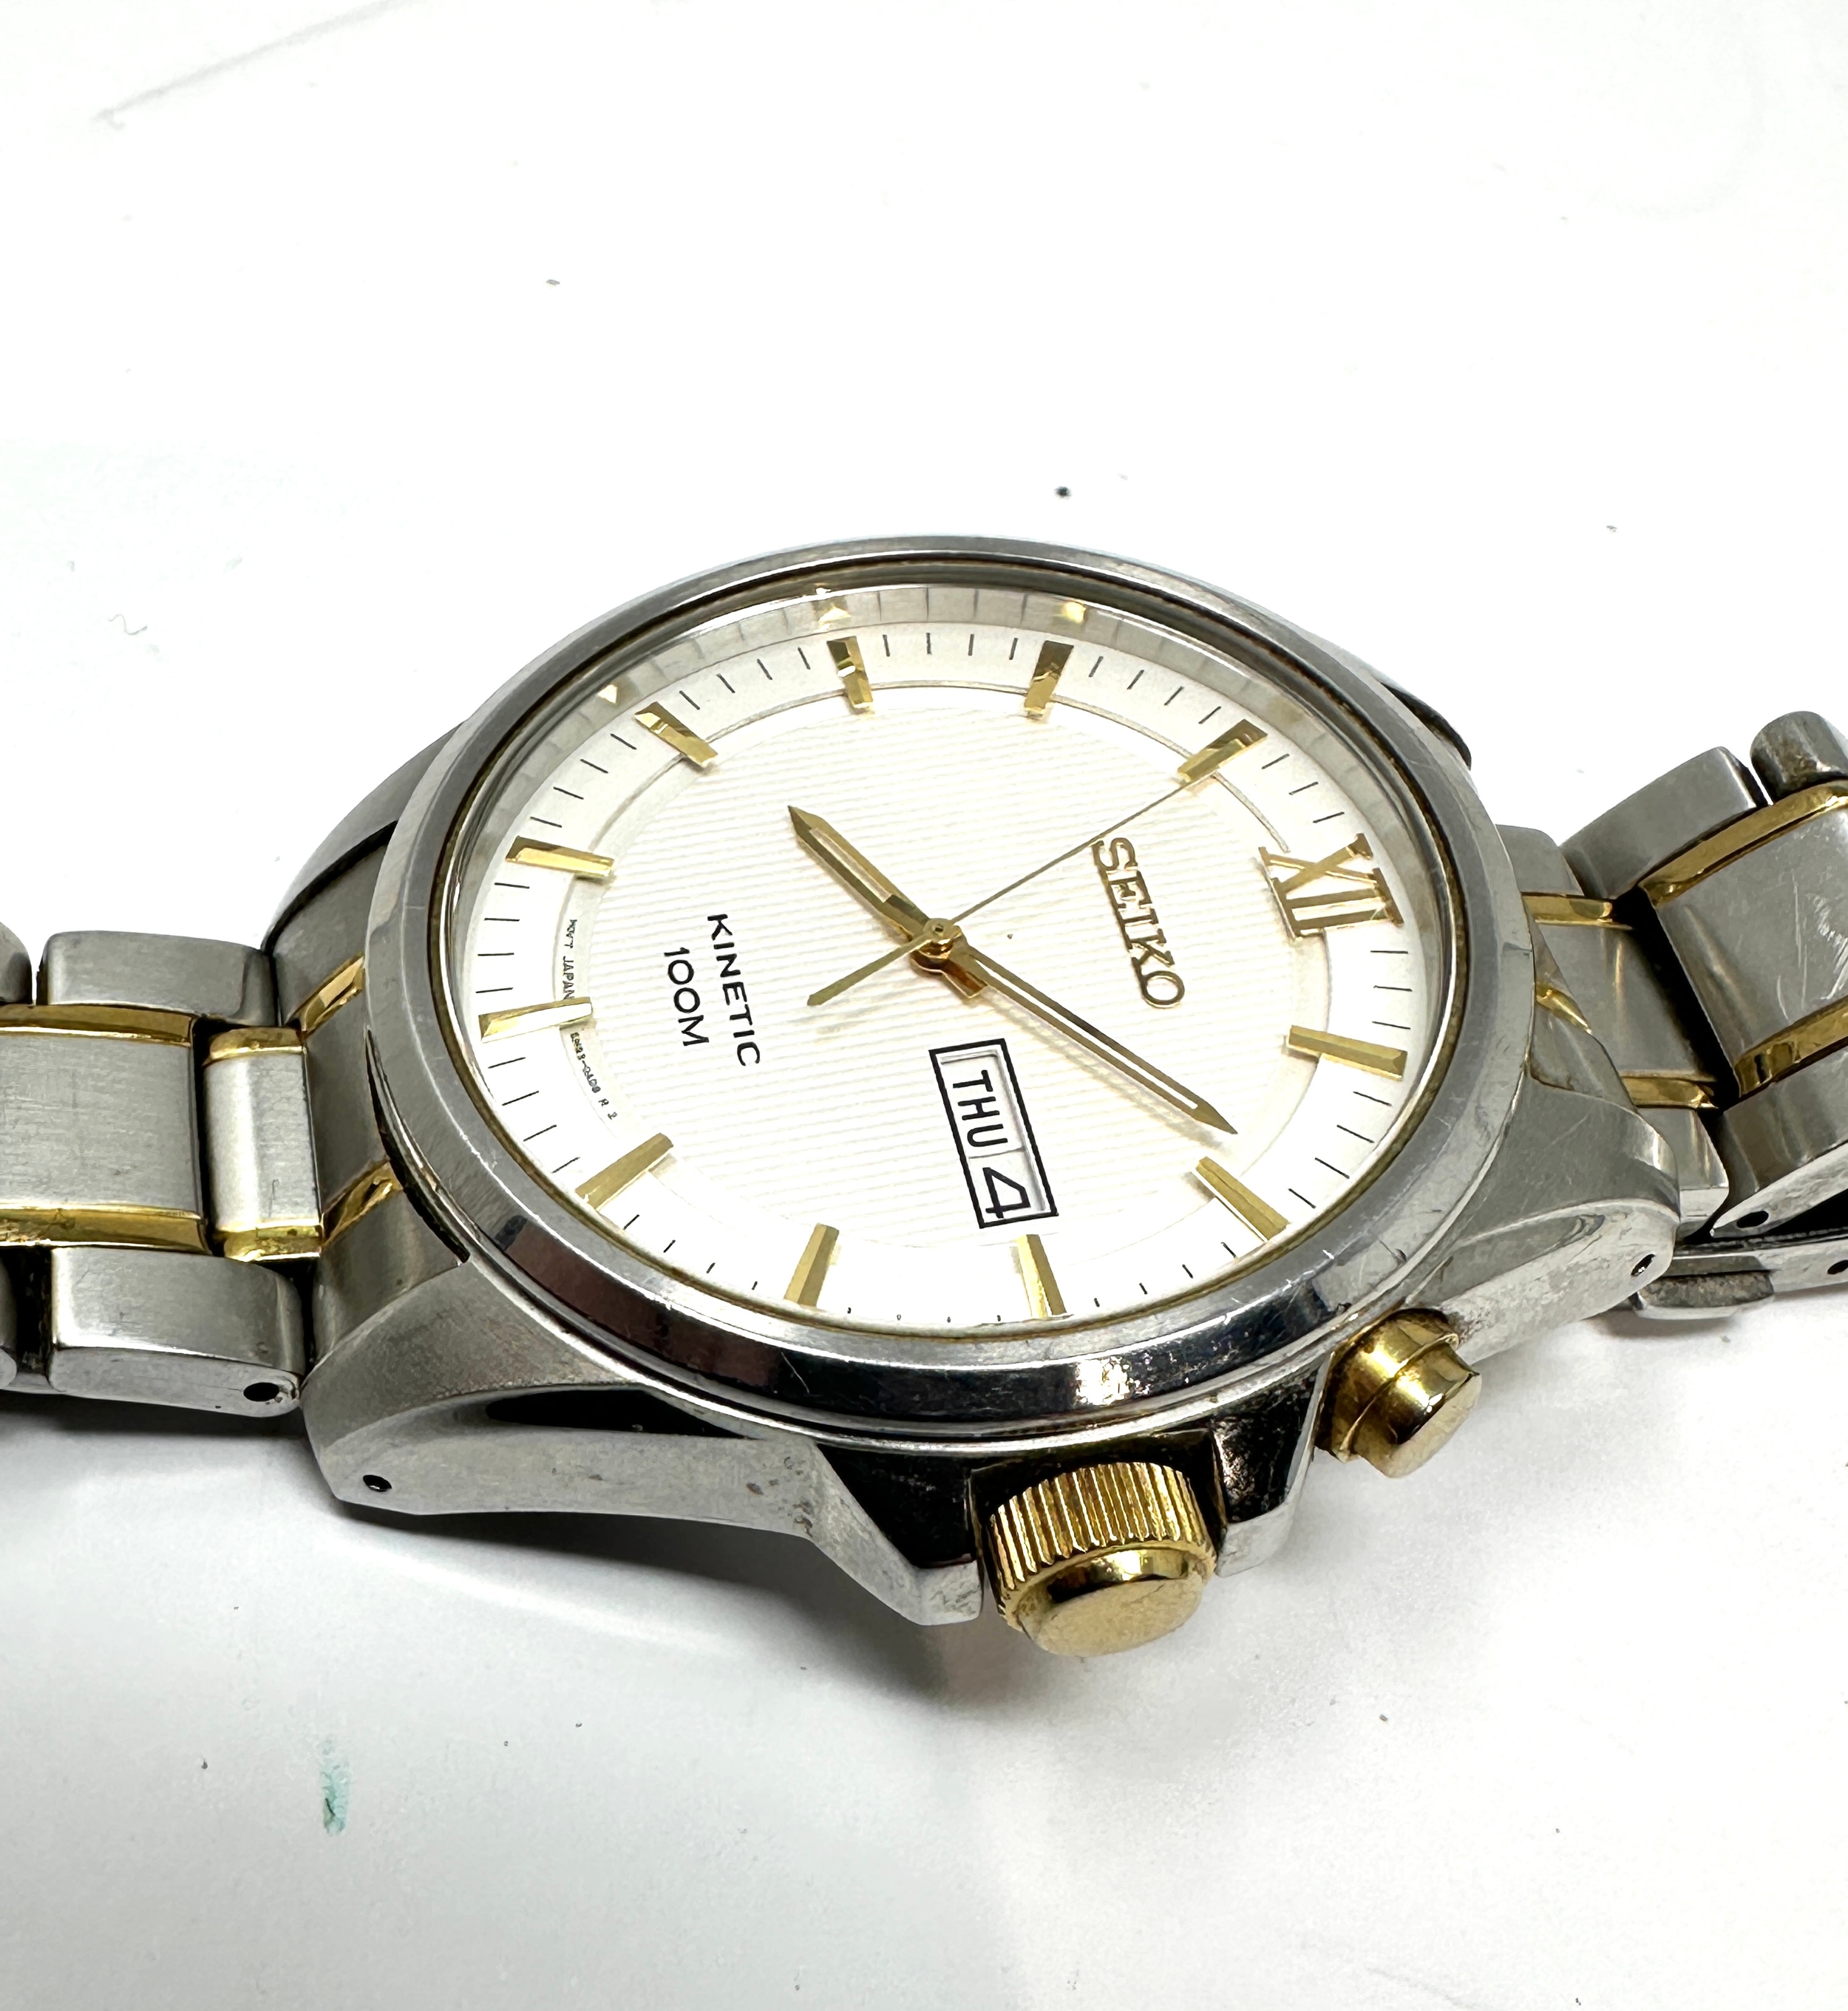 Seiko kinetic 100m wristwatch 5m83-0ac0 gents wristwatch the watch is ticking - Image 3 of 5